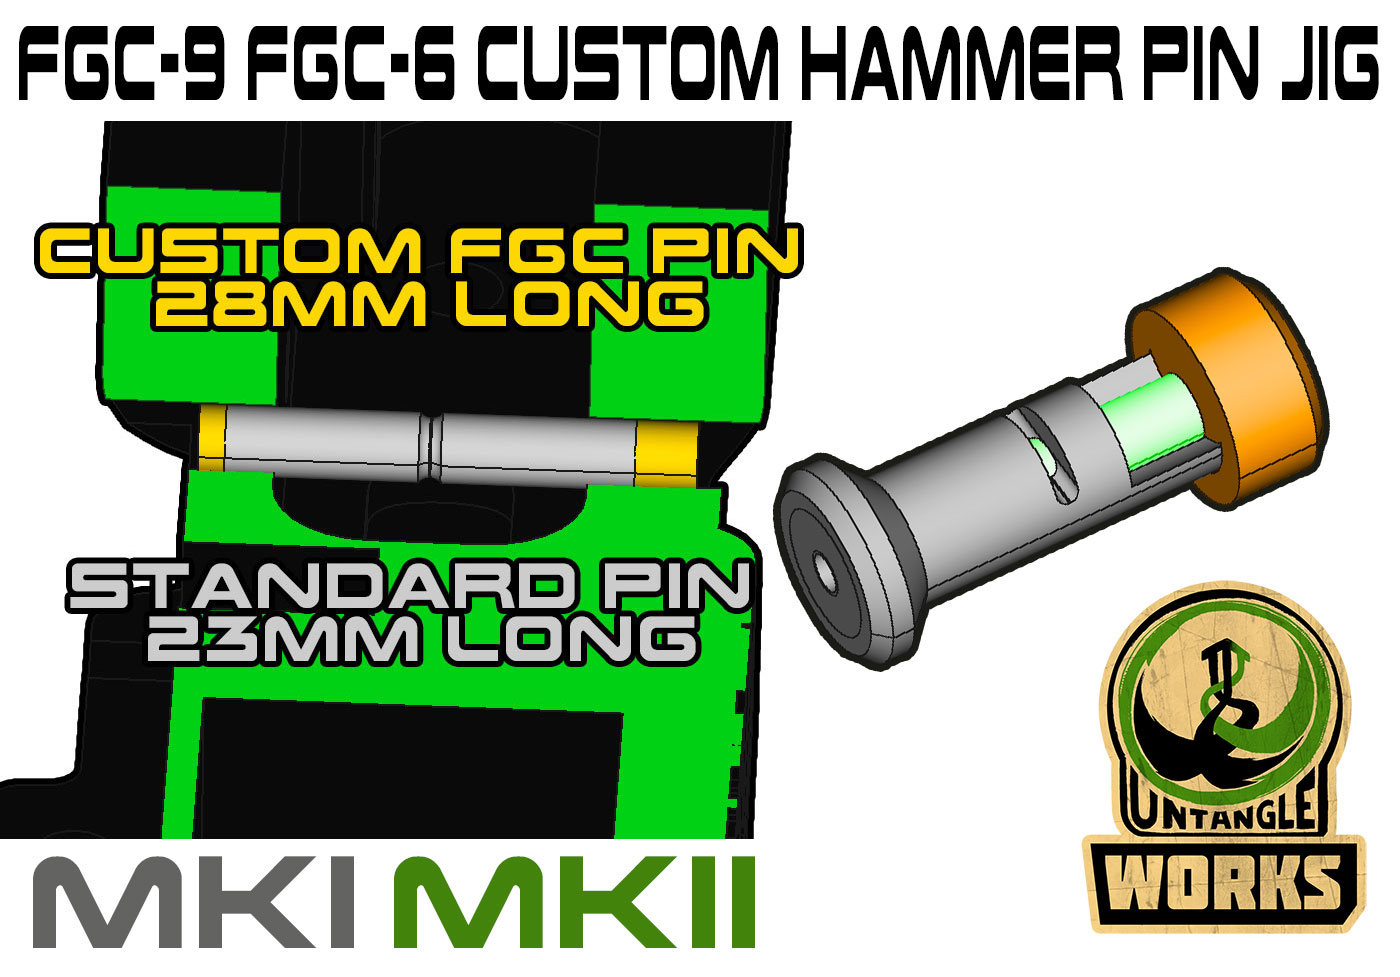 FGC-9 FGC-6 Custom hammer pin JIG